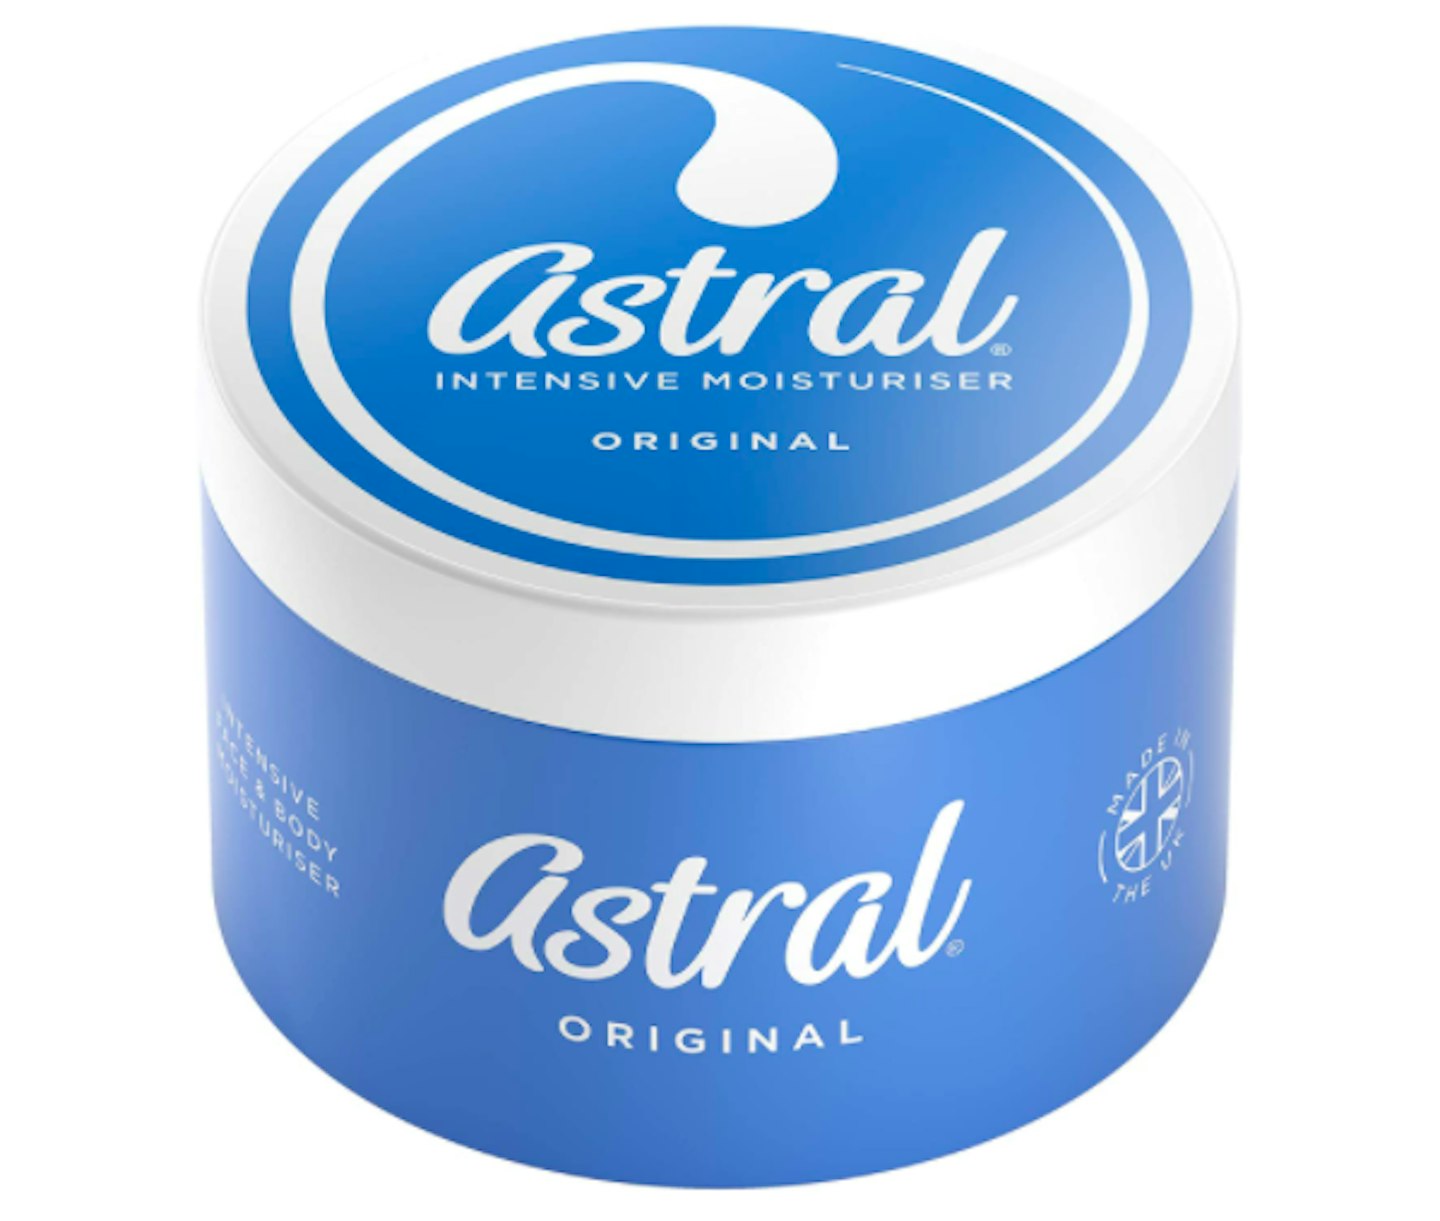 ASTRAL Face & Body Intensive Moisturiser Cream